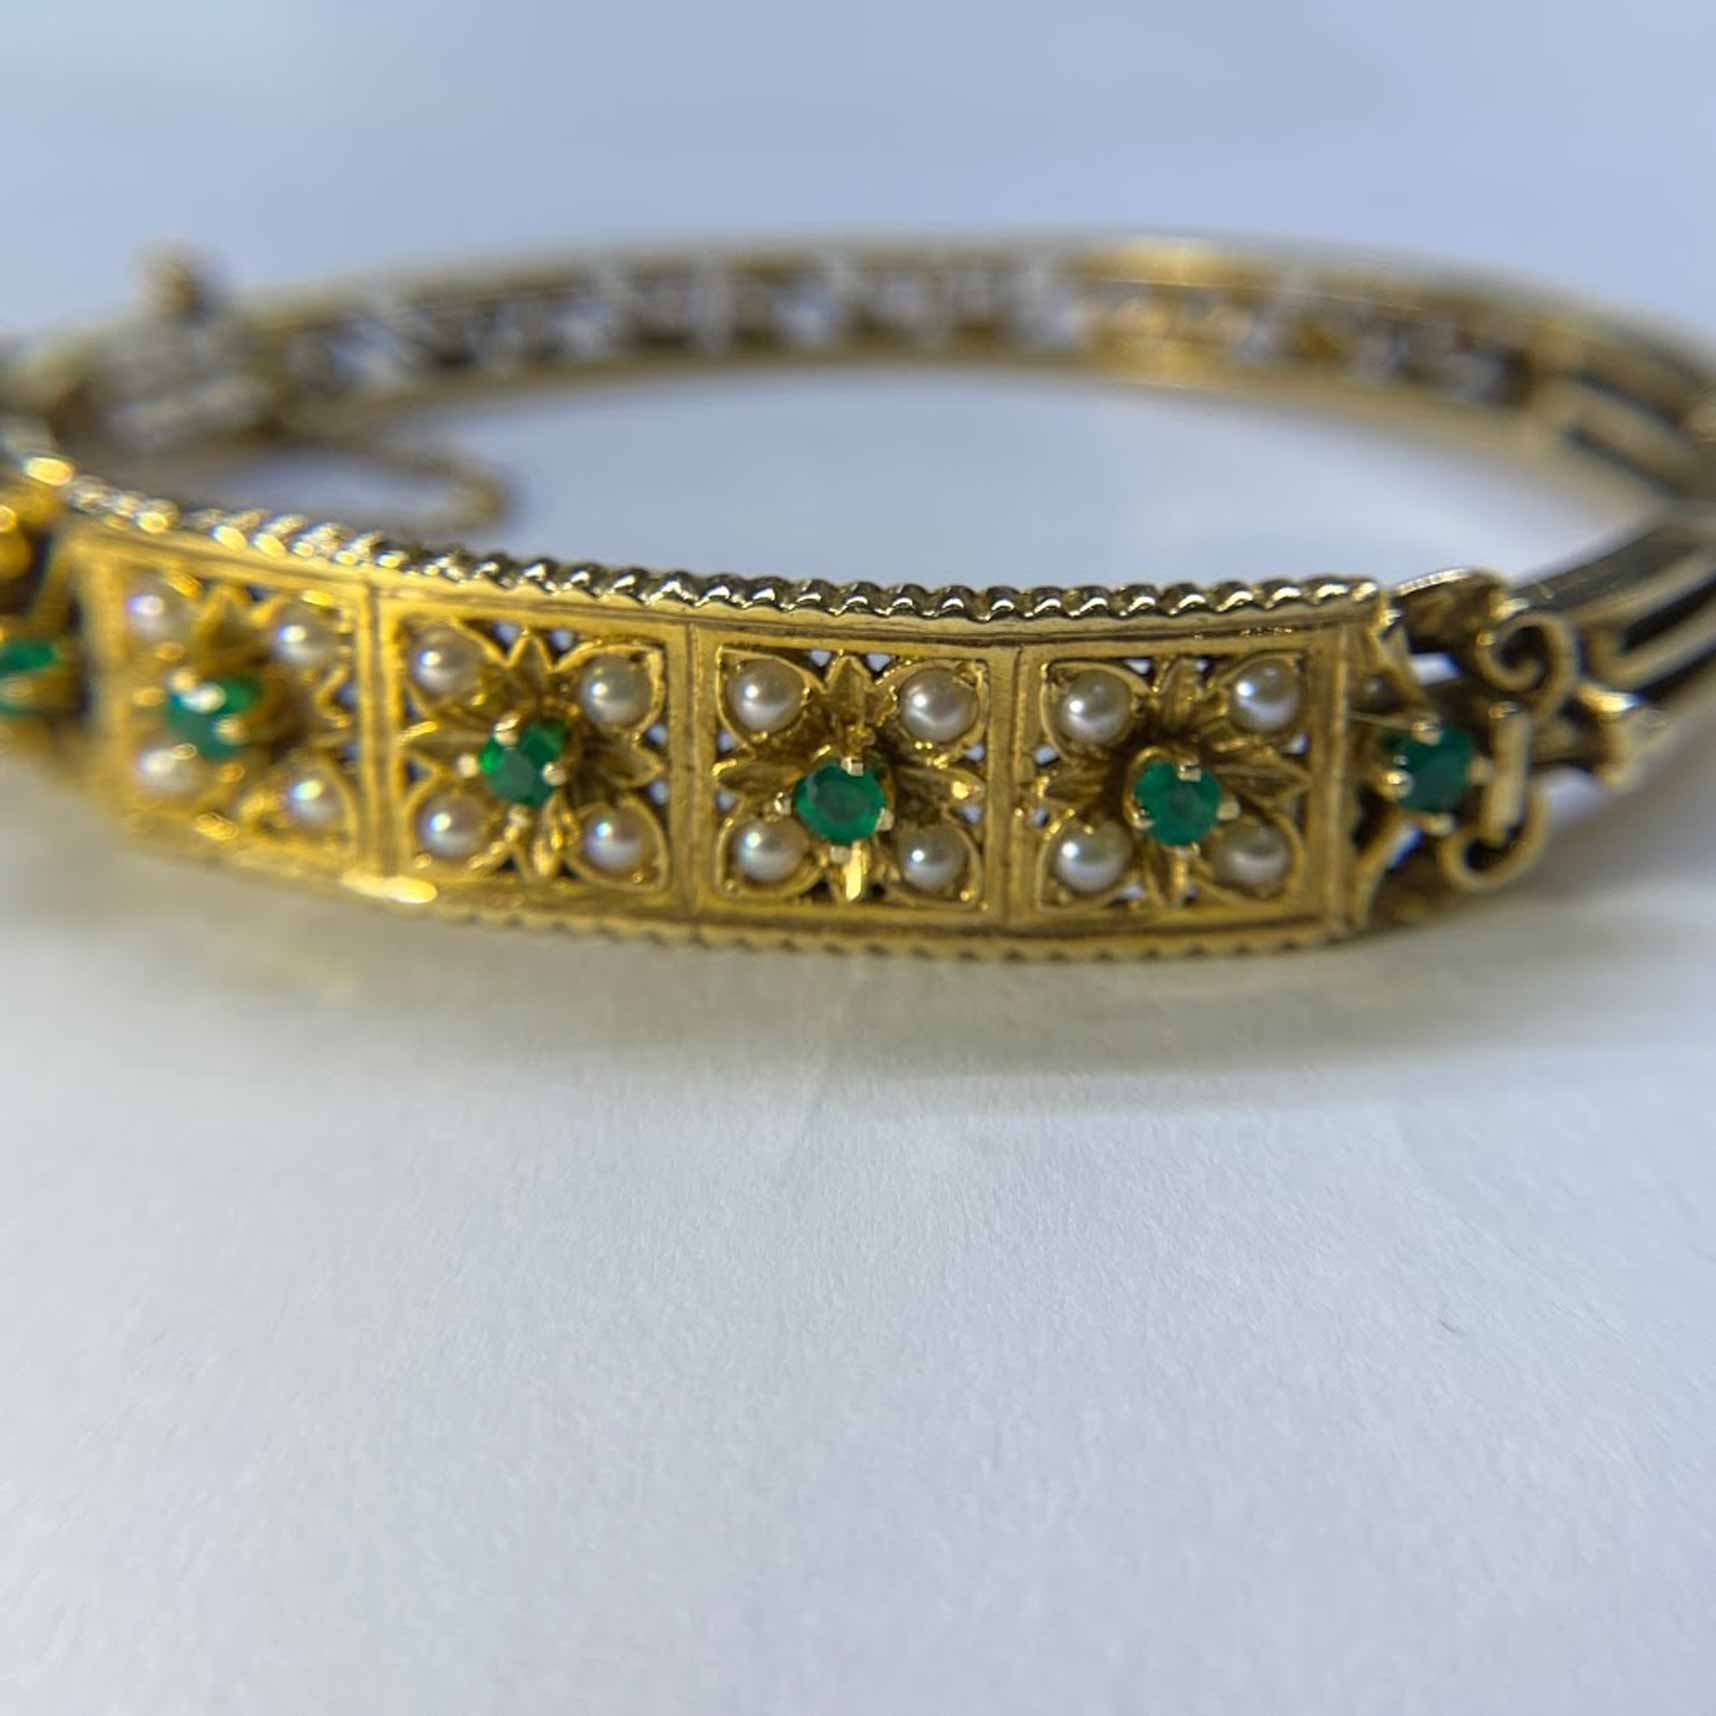 Share 74+ antique emerald bracelet latest - 3tdesign.edu.vn